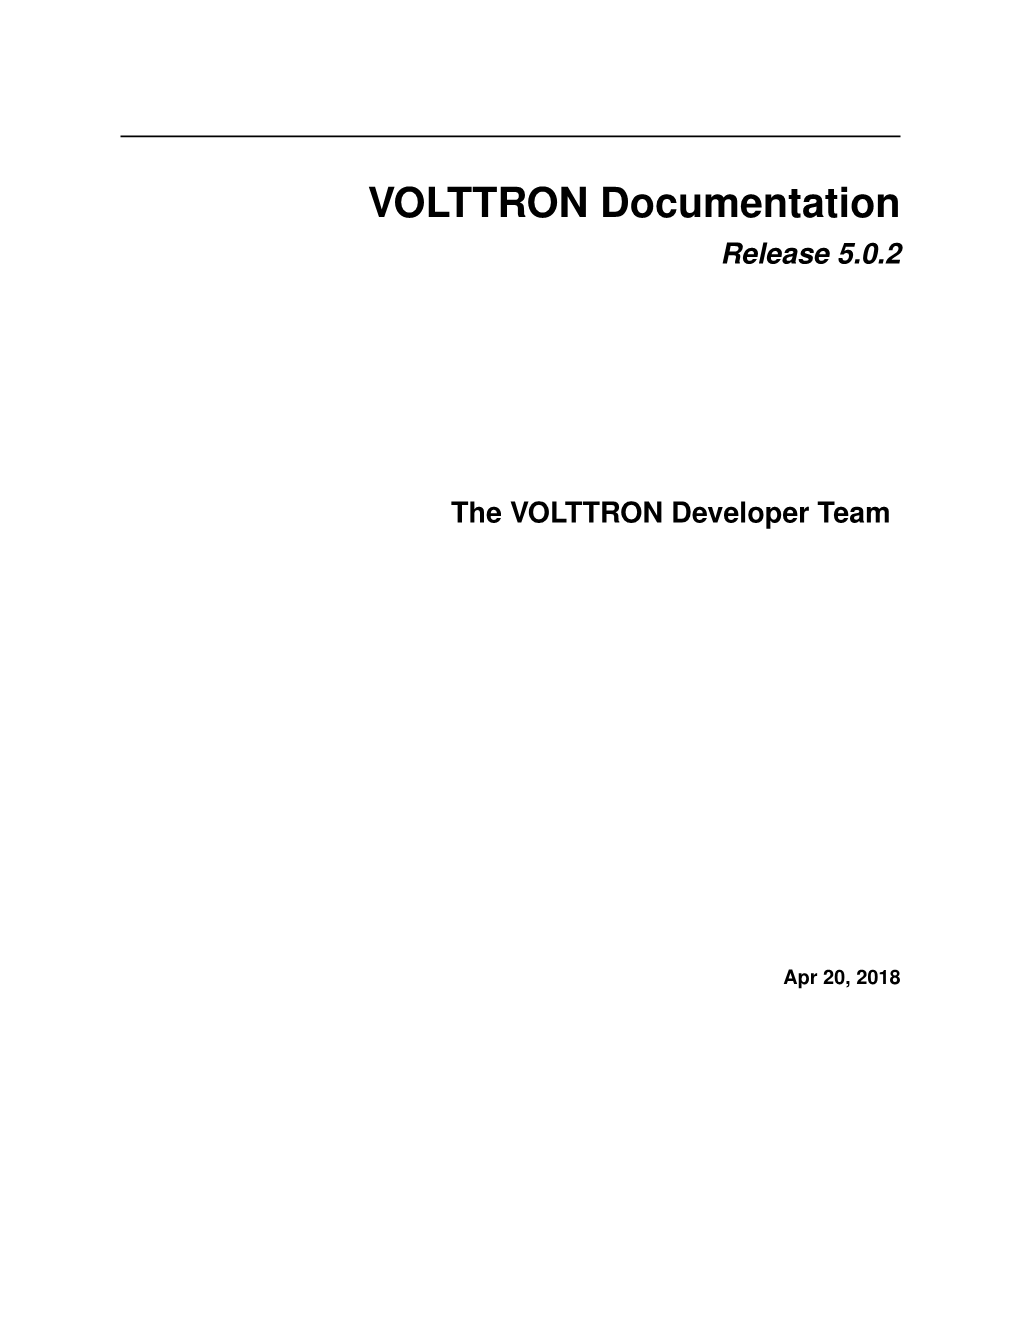 VOLTTRON Documentation Release 5.0.2